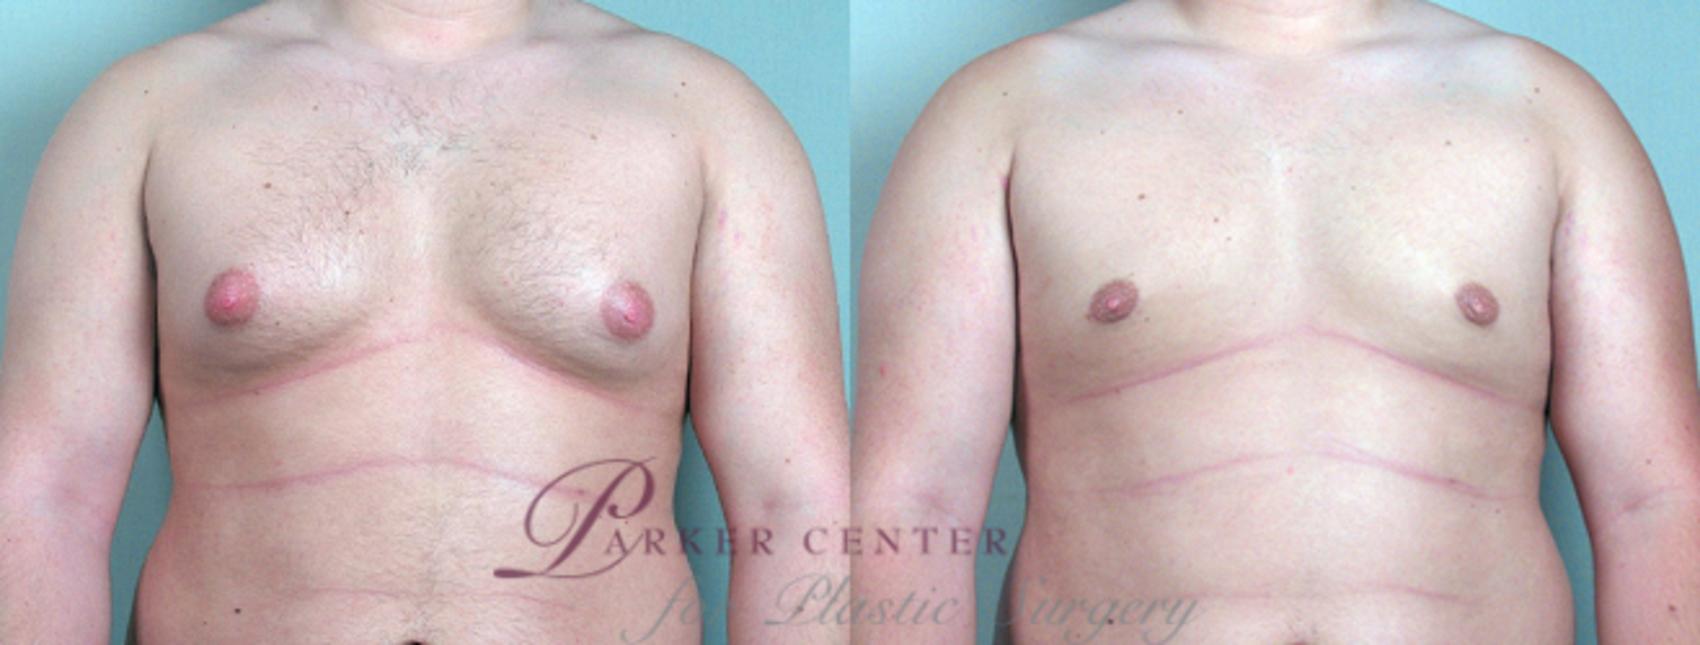 Gynecomastia Surgery Case 616 Before & After View #1 | Paramus, NJ | Parker Center for Plastic Surgery